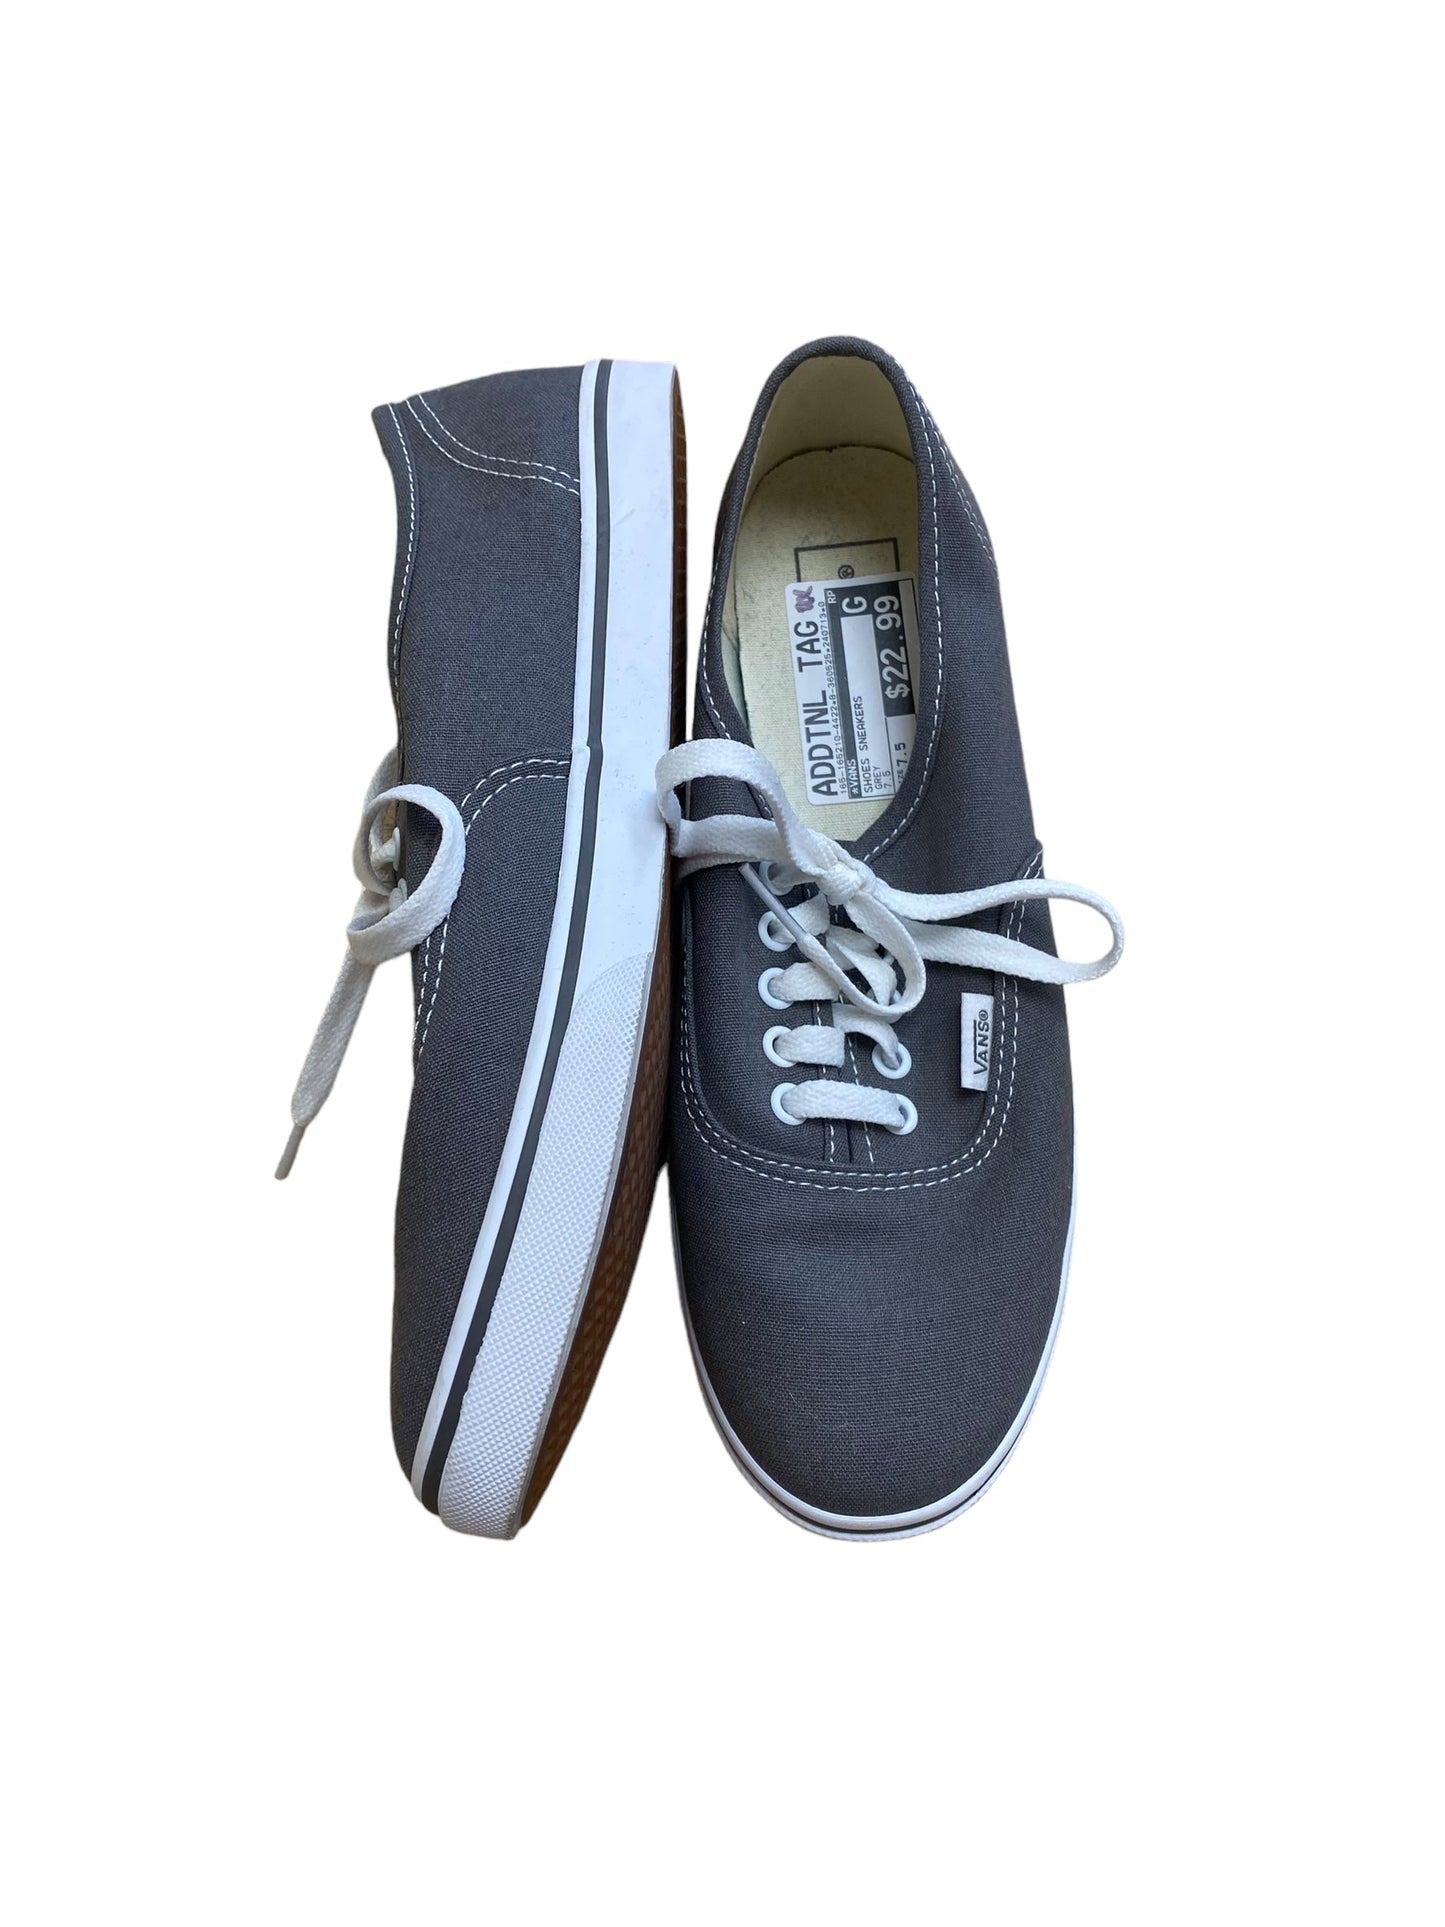 Grey Shoes Sneakers Vans, Size 7.5